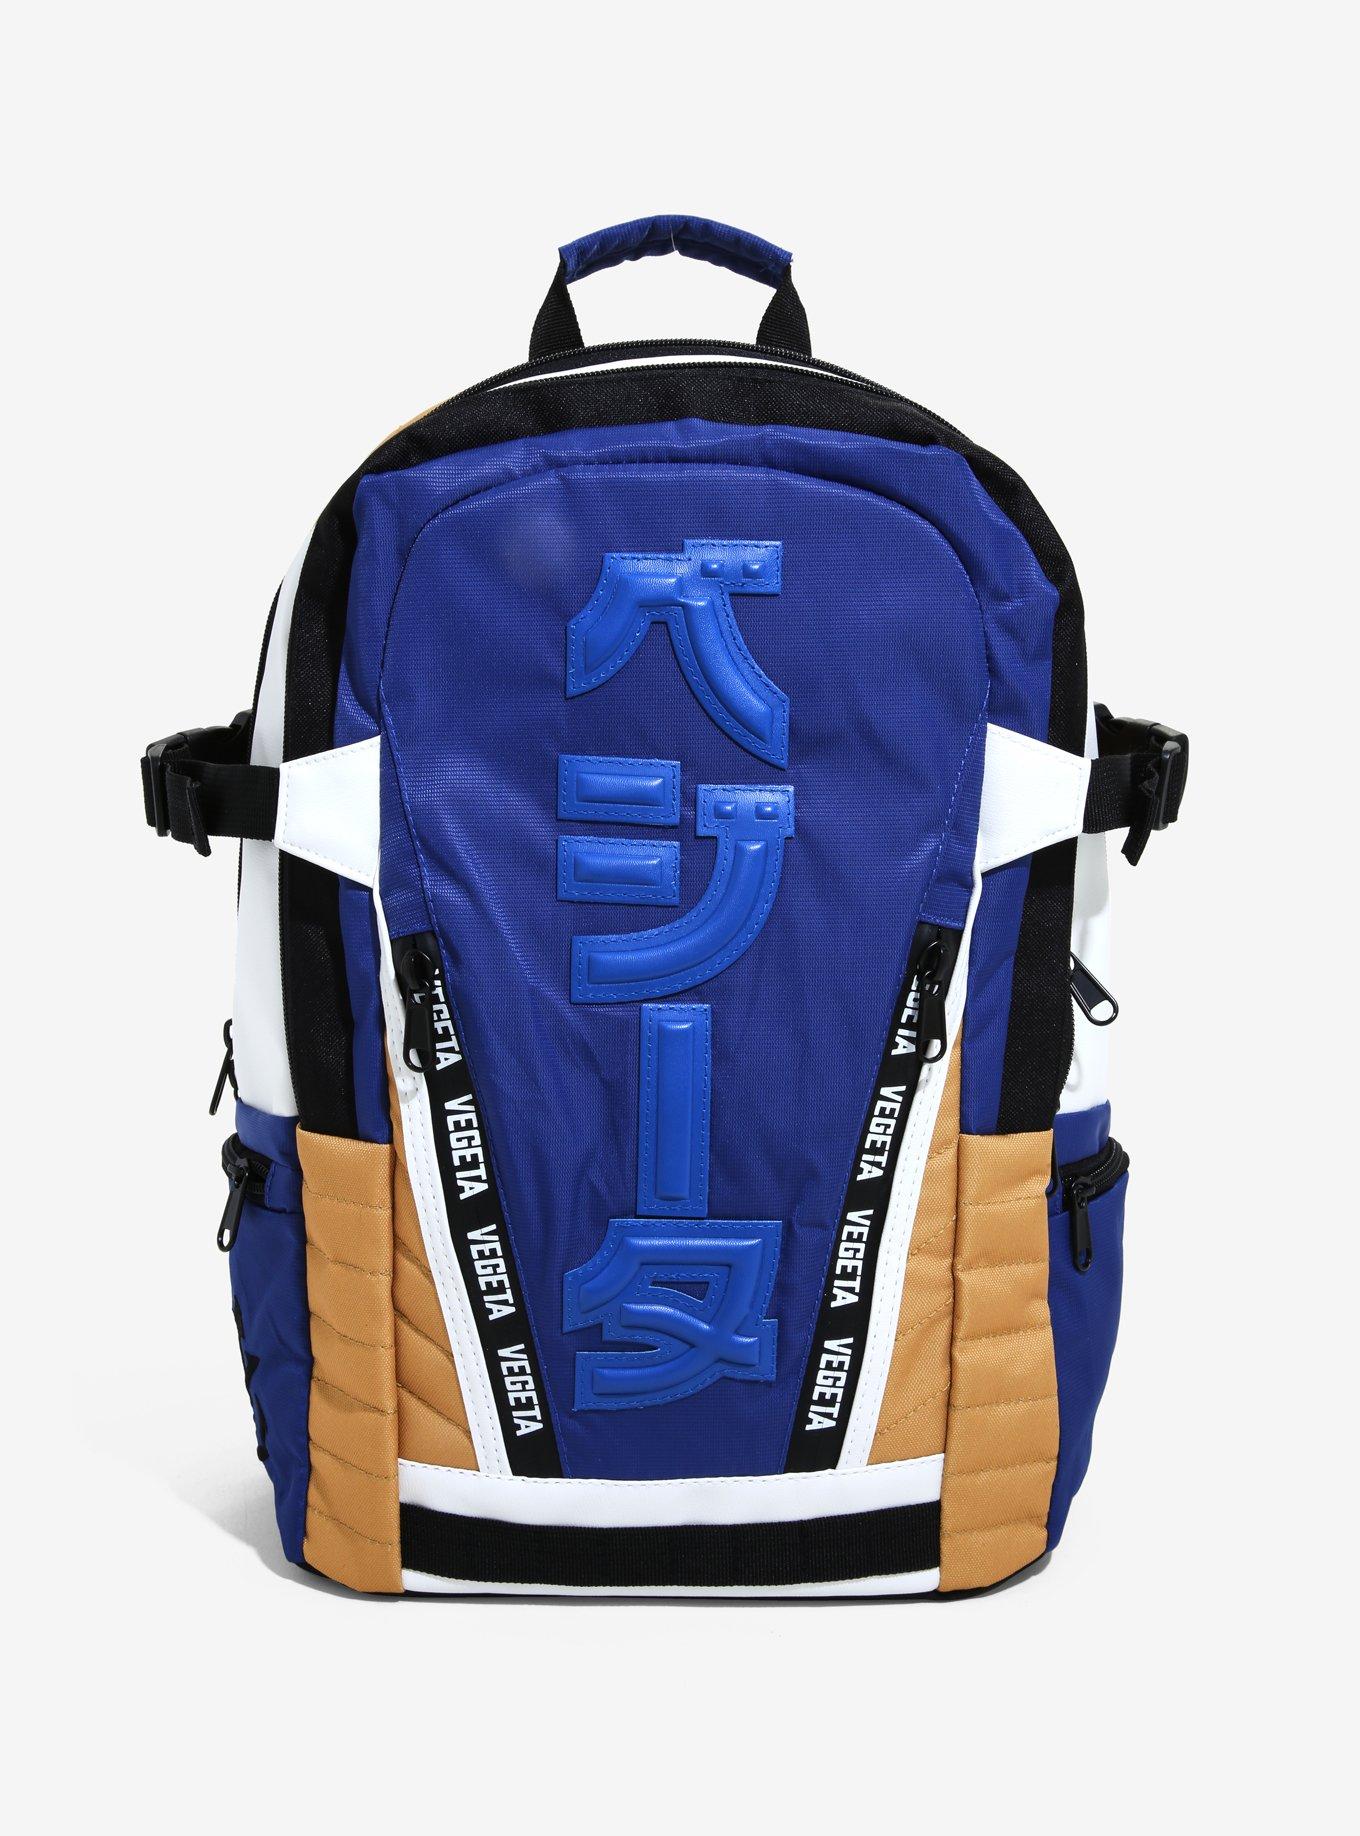 Dragon Ball Z Vegeta Kanji Built-Up Backpack - BoxLunch Exclusive, , hi-res